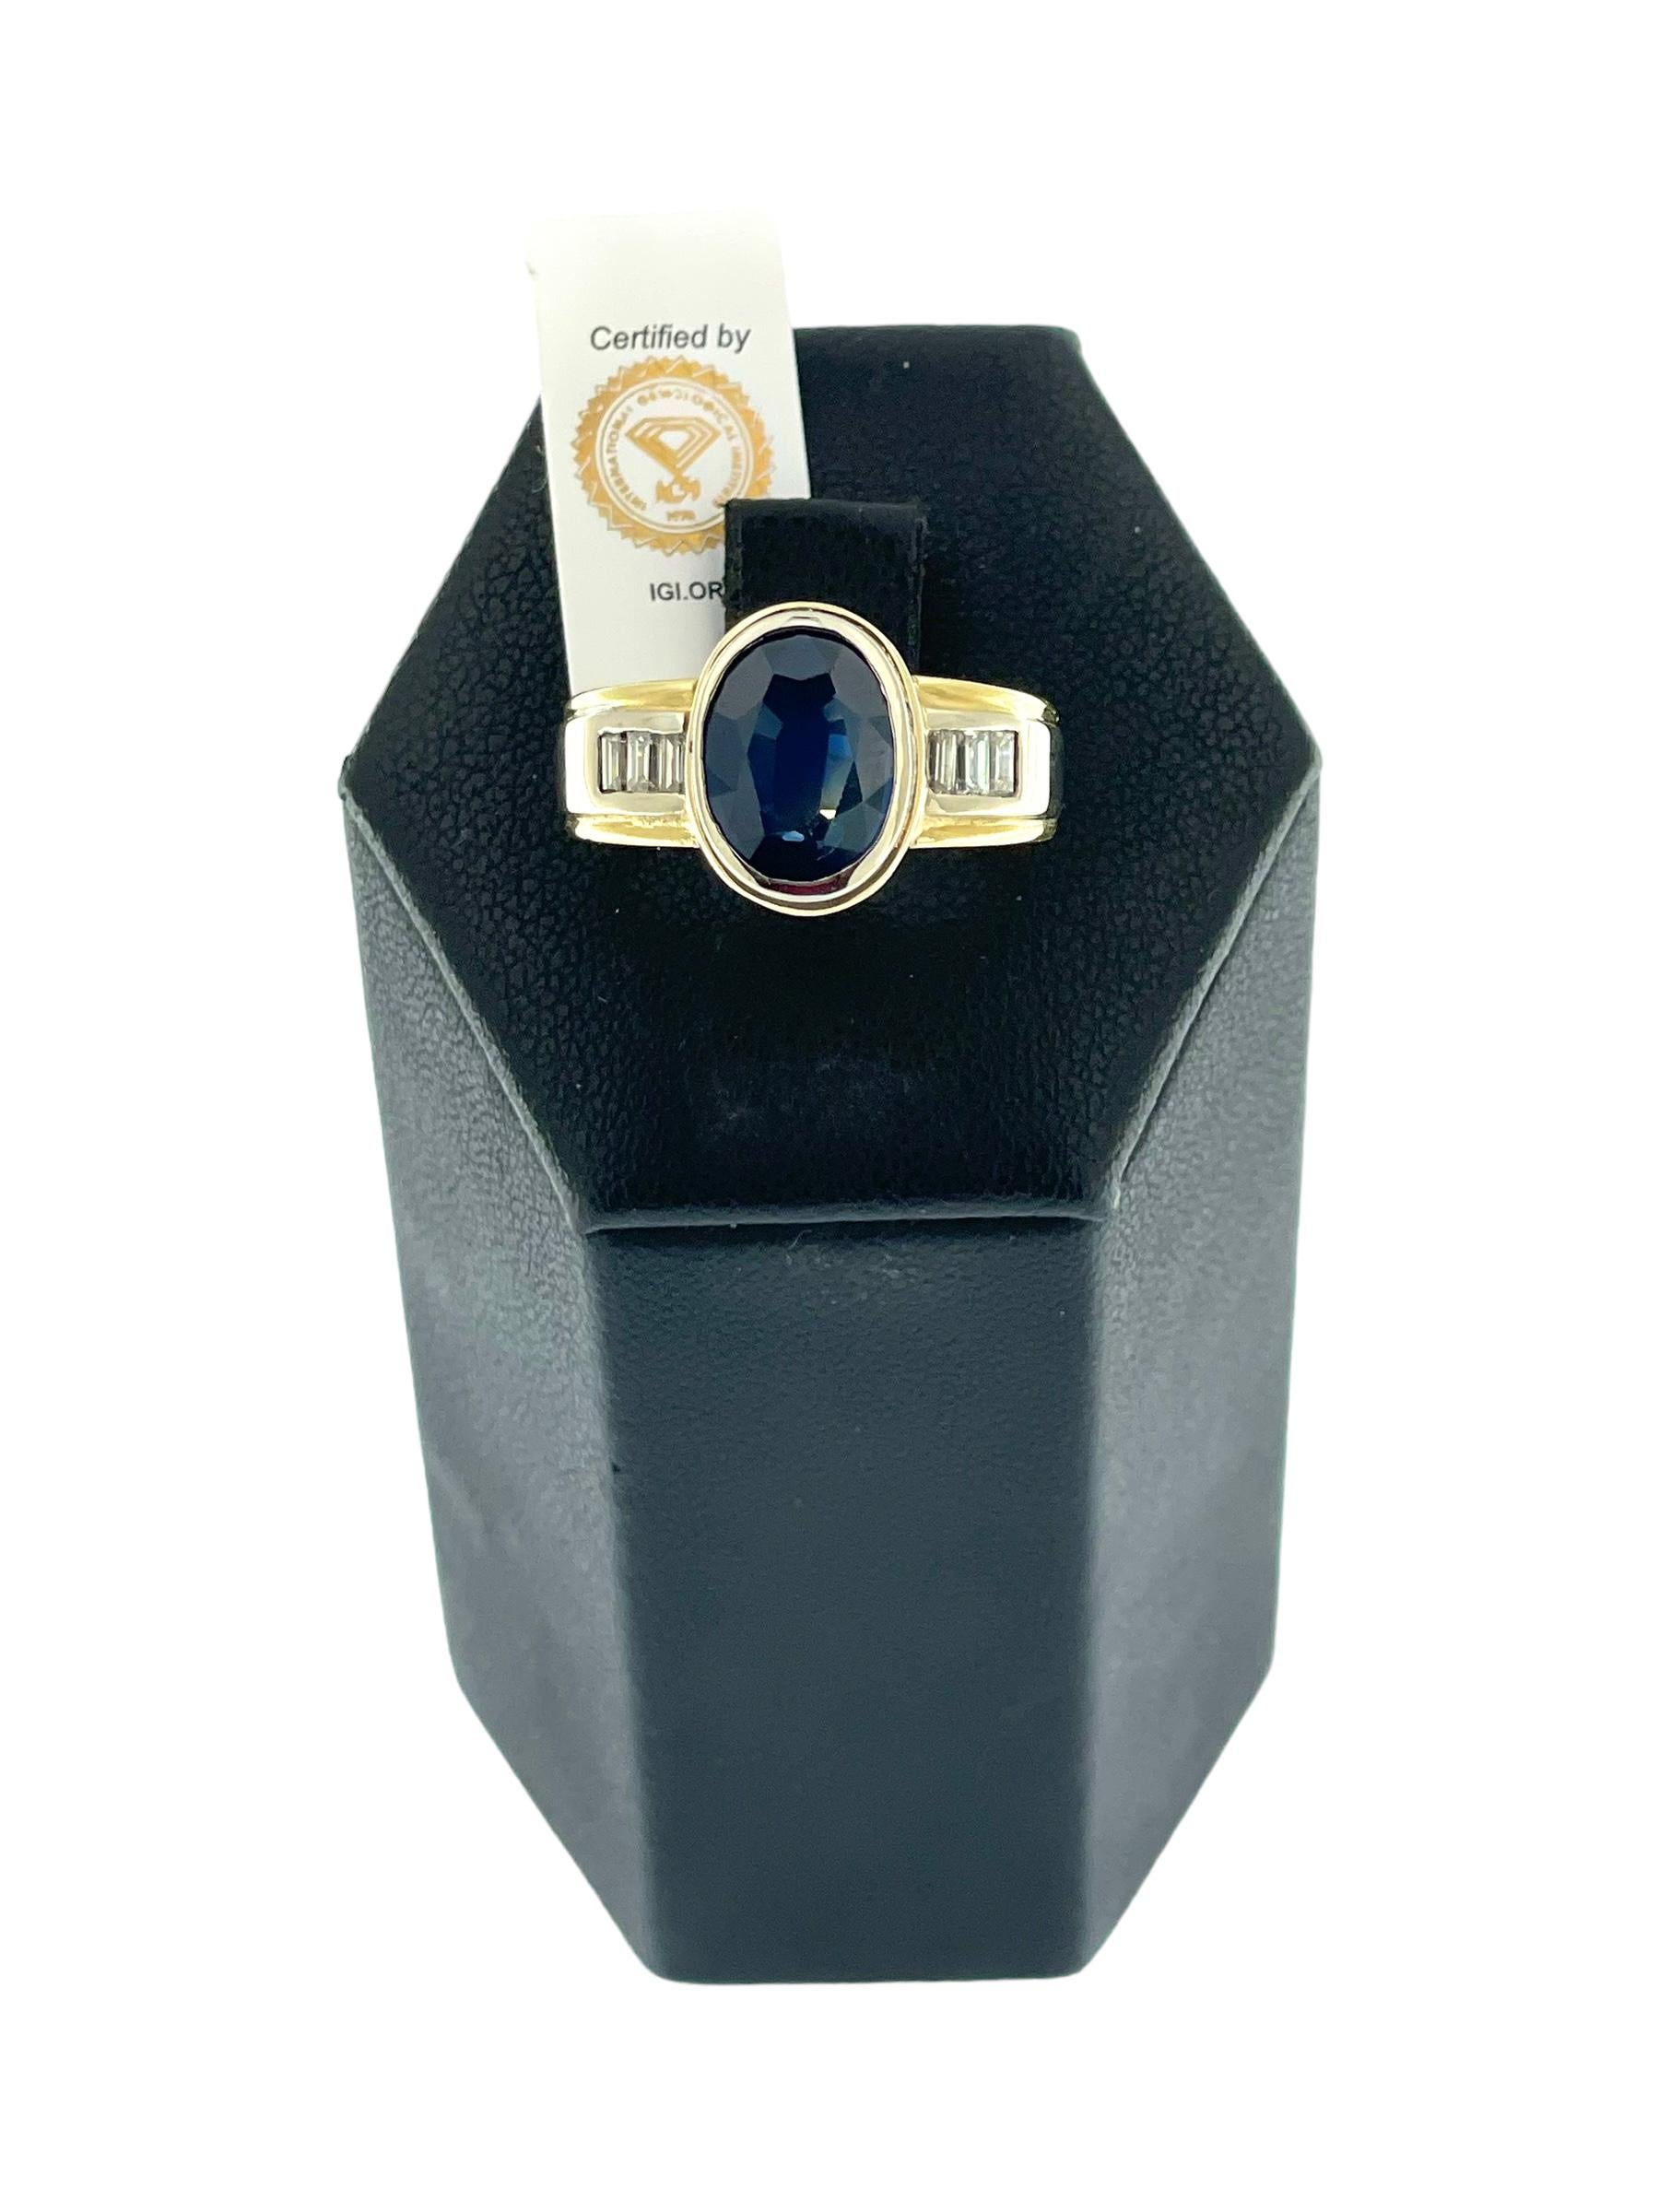 IGI Certified Gold Band Ring Sapphire and Diamonds In Good Condition For Sale In Esch sur Alzette, Esch-sur-Alzette